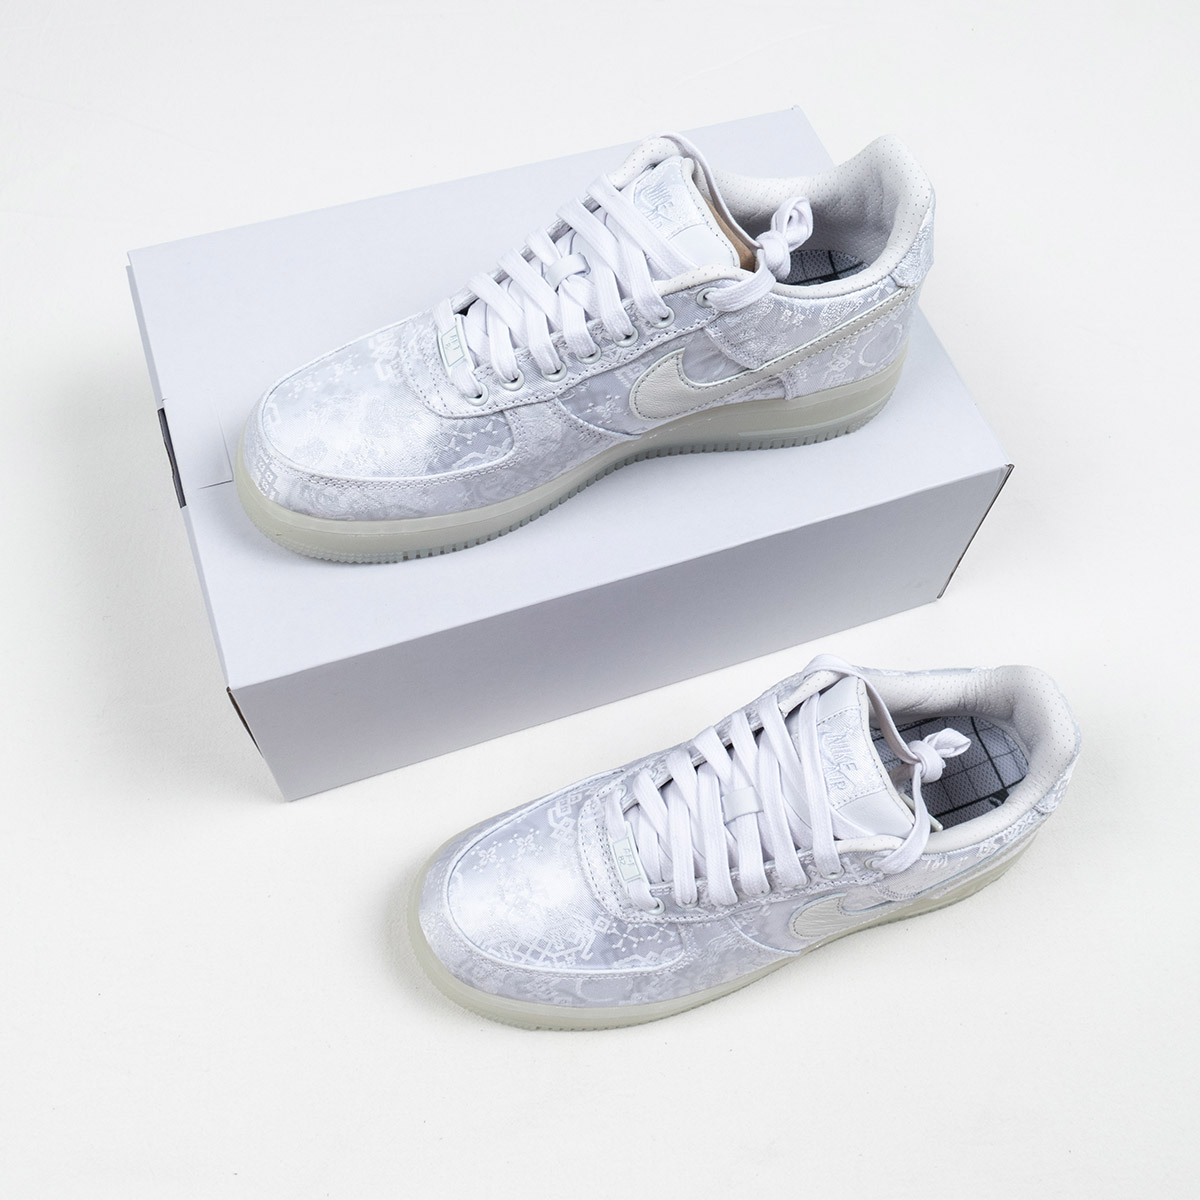 CLOT x Nike Air Force 1 Premium White AO9286-100 For Sale – Sneaker Hello